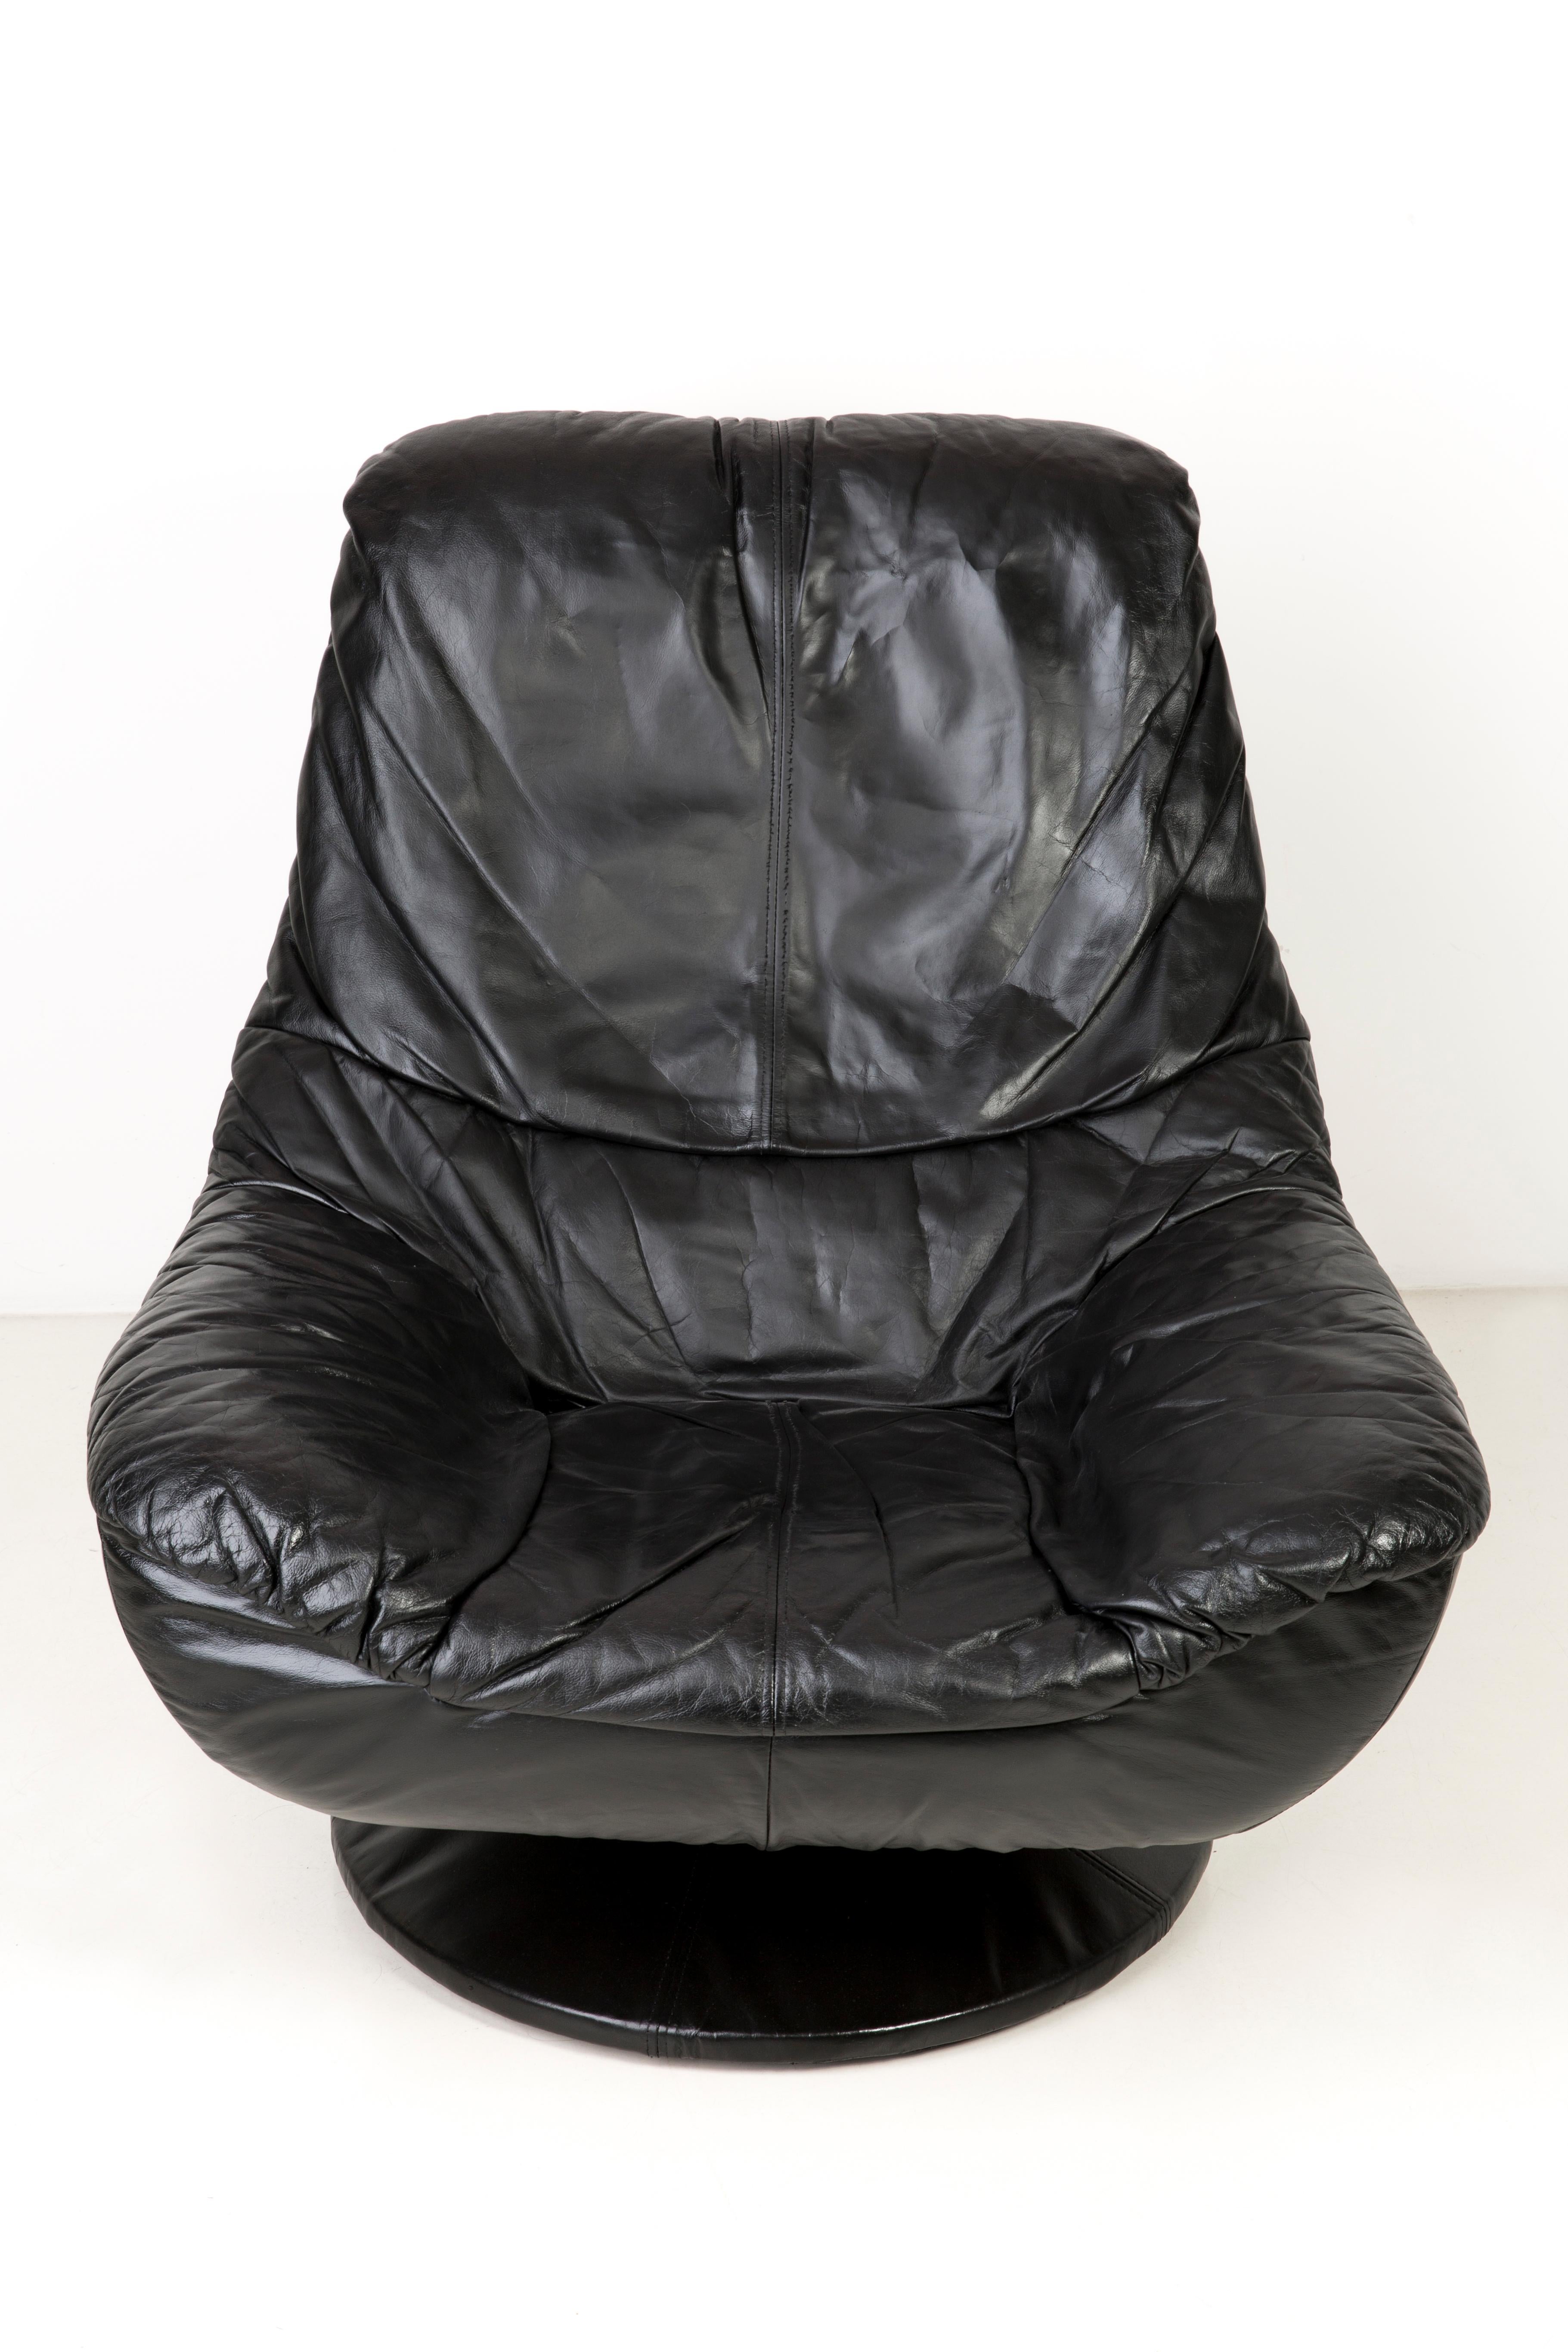 1960s swivel chair